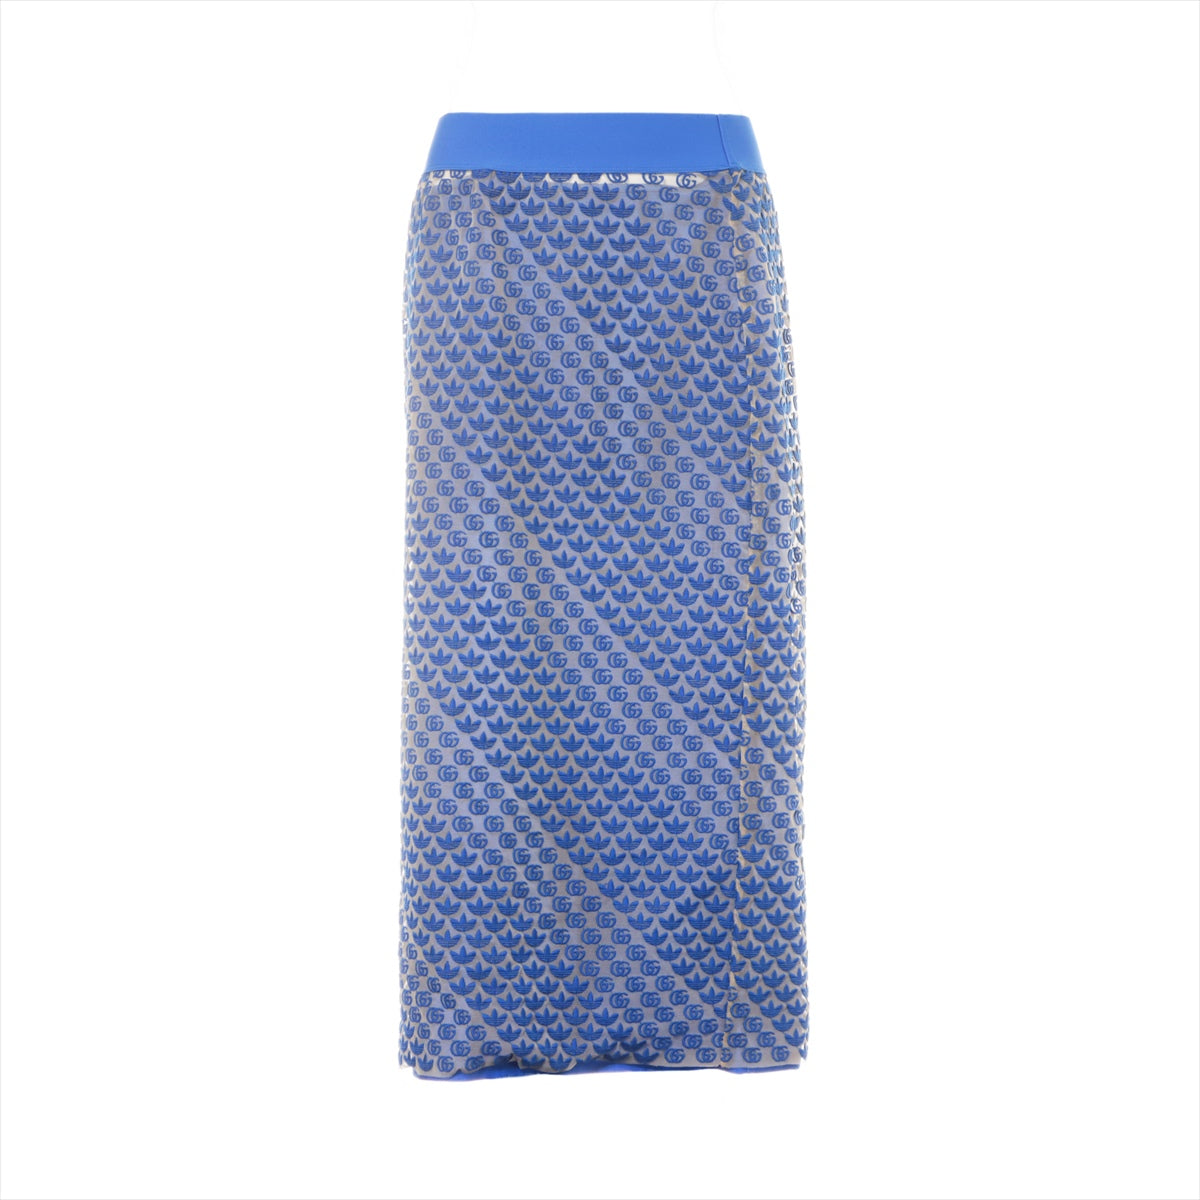 Gucci x adidas Nylon x polyurethane Skirt L Ladies' Blue  693499 Comes with petticoat